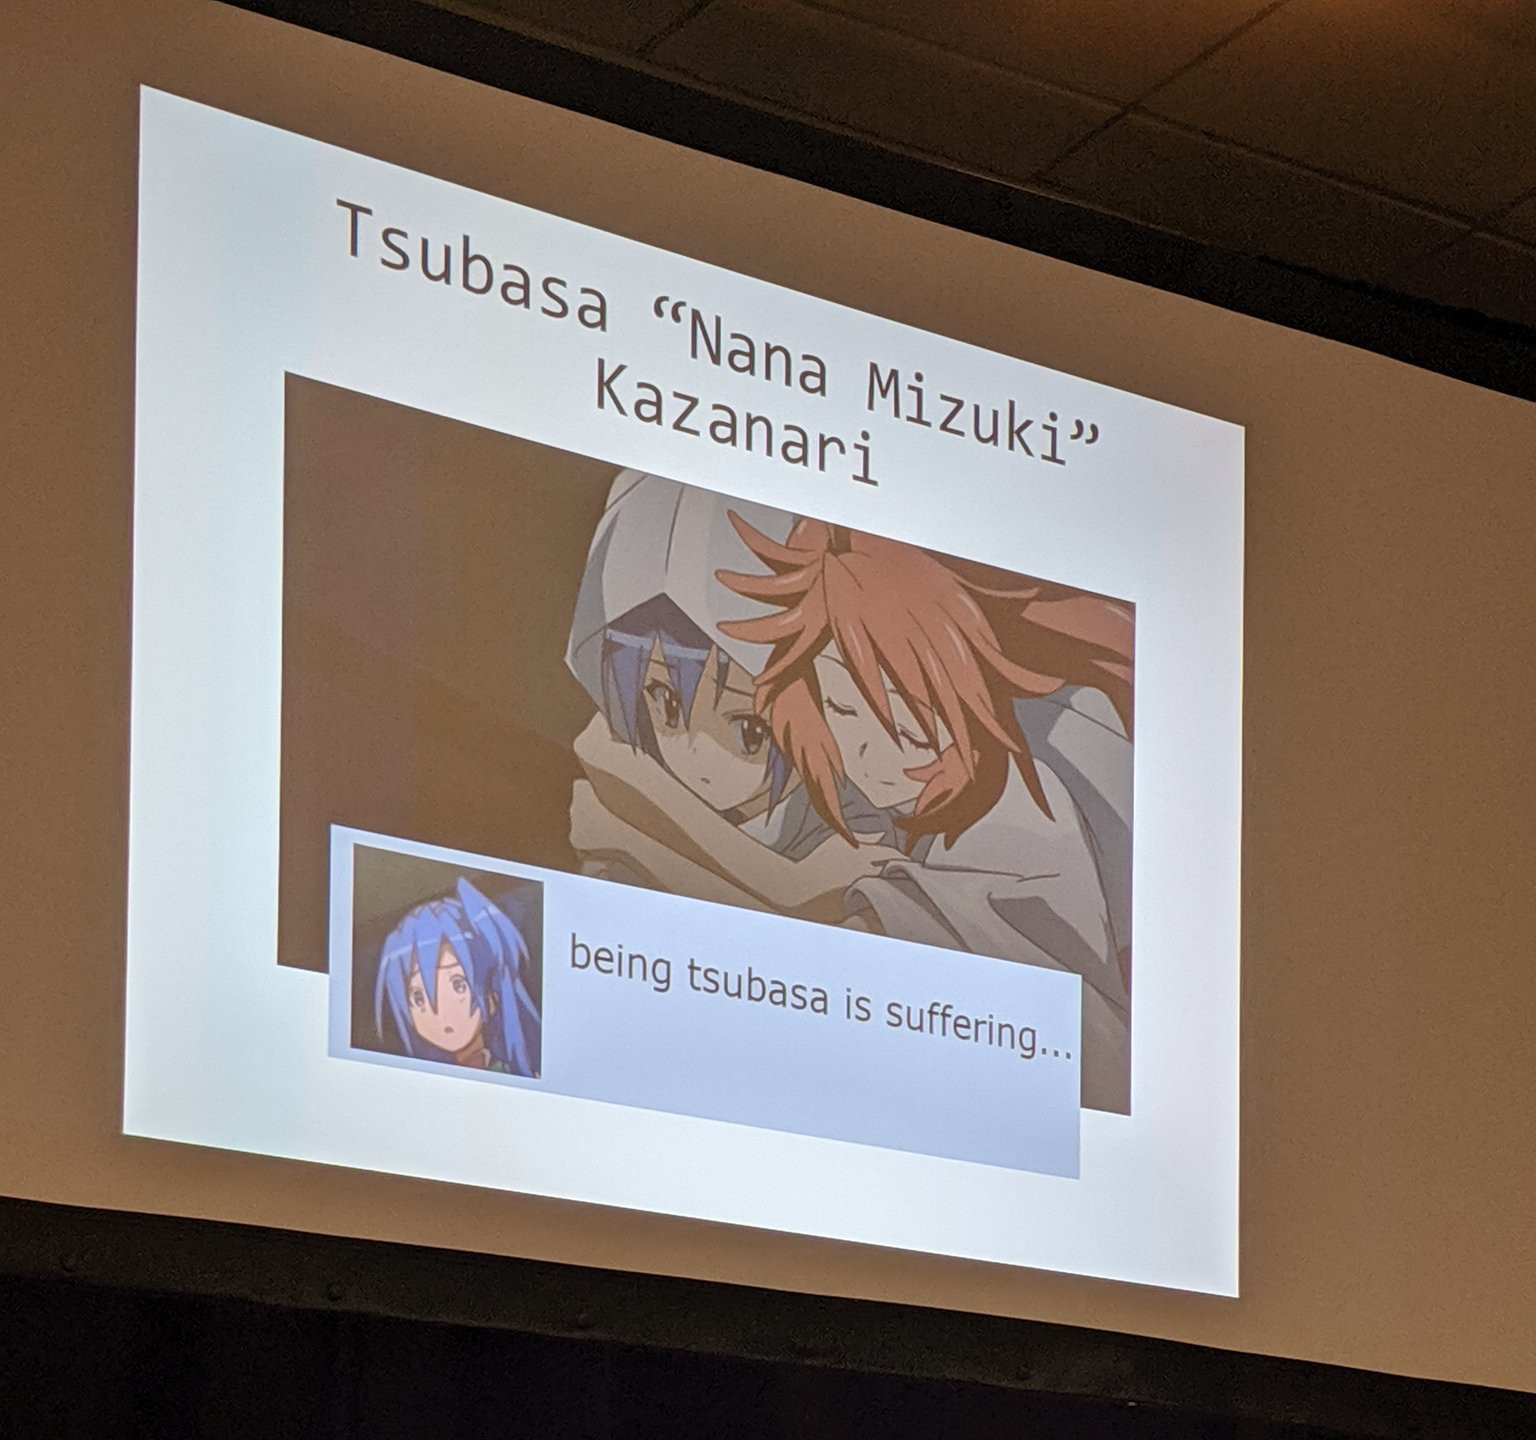 Panel Slide: Being Tsubasa is suffering